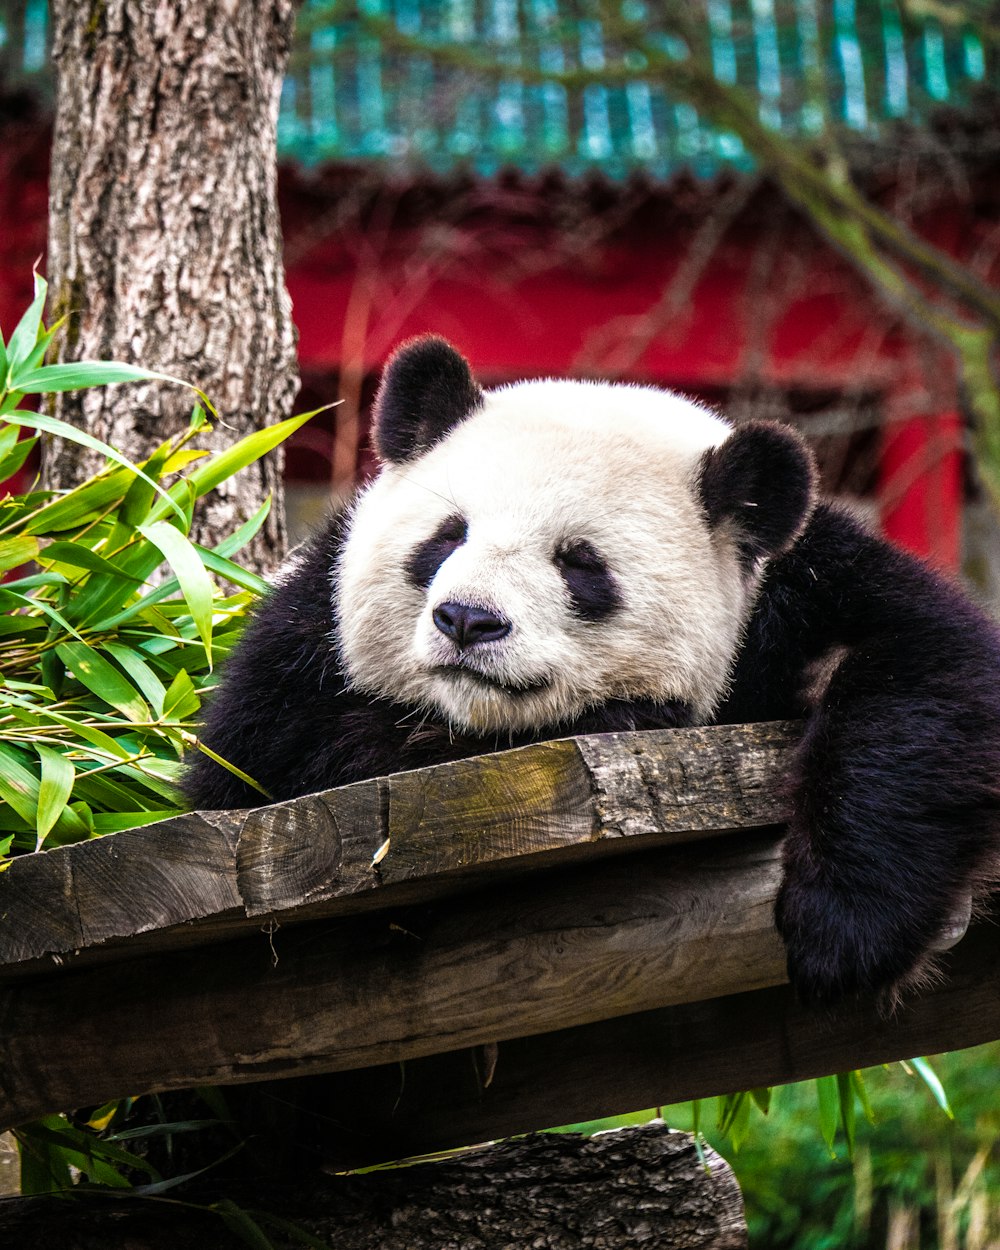 orso panda sulla plancia grigia vicino alla pianta verde